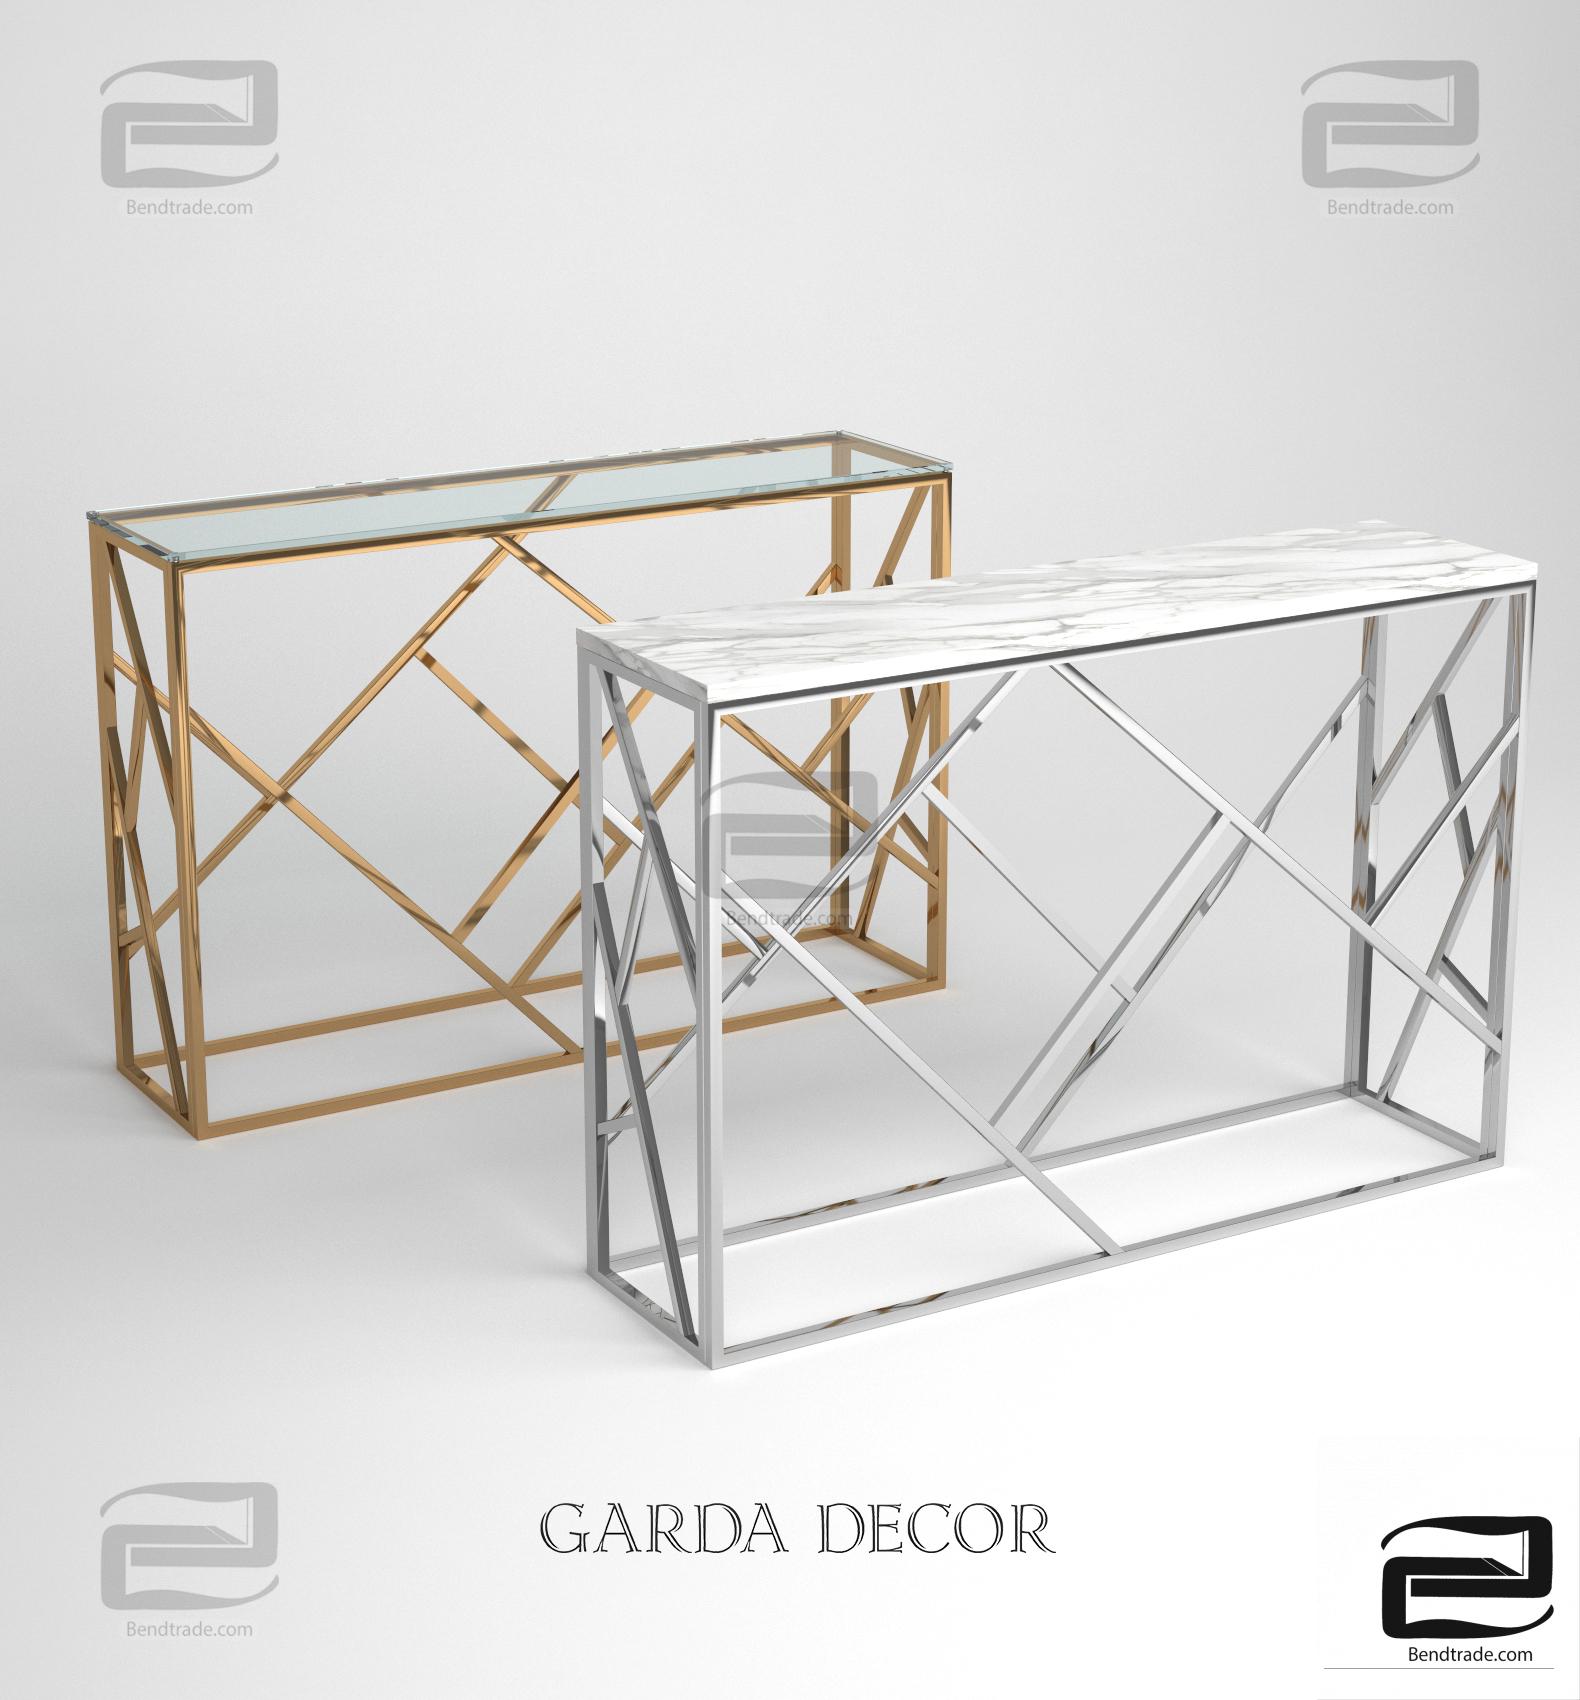 Garda Decor Console 3D Model id 6670 3D model free download on ...